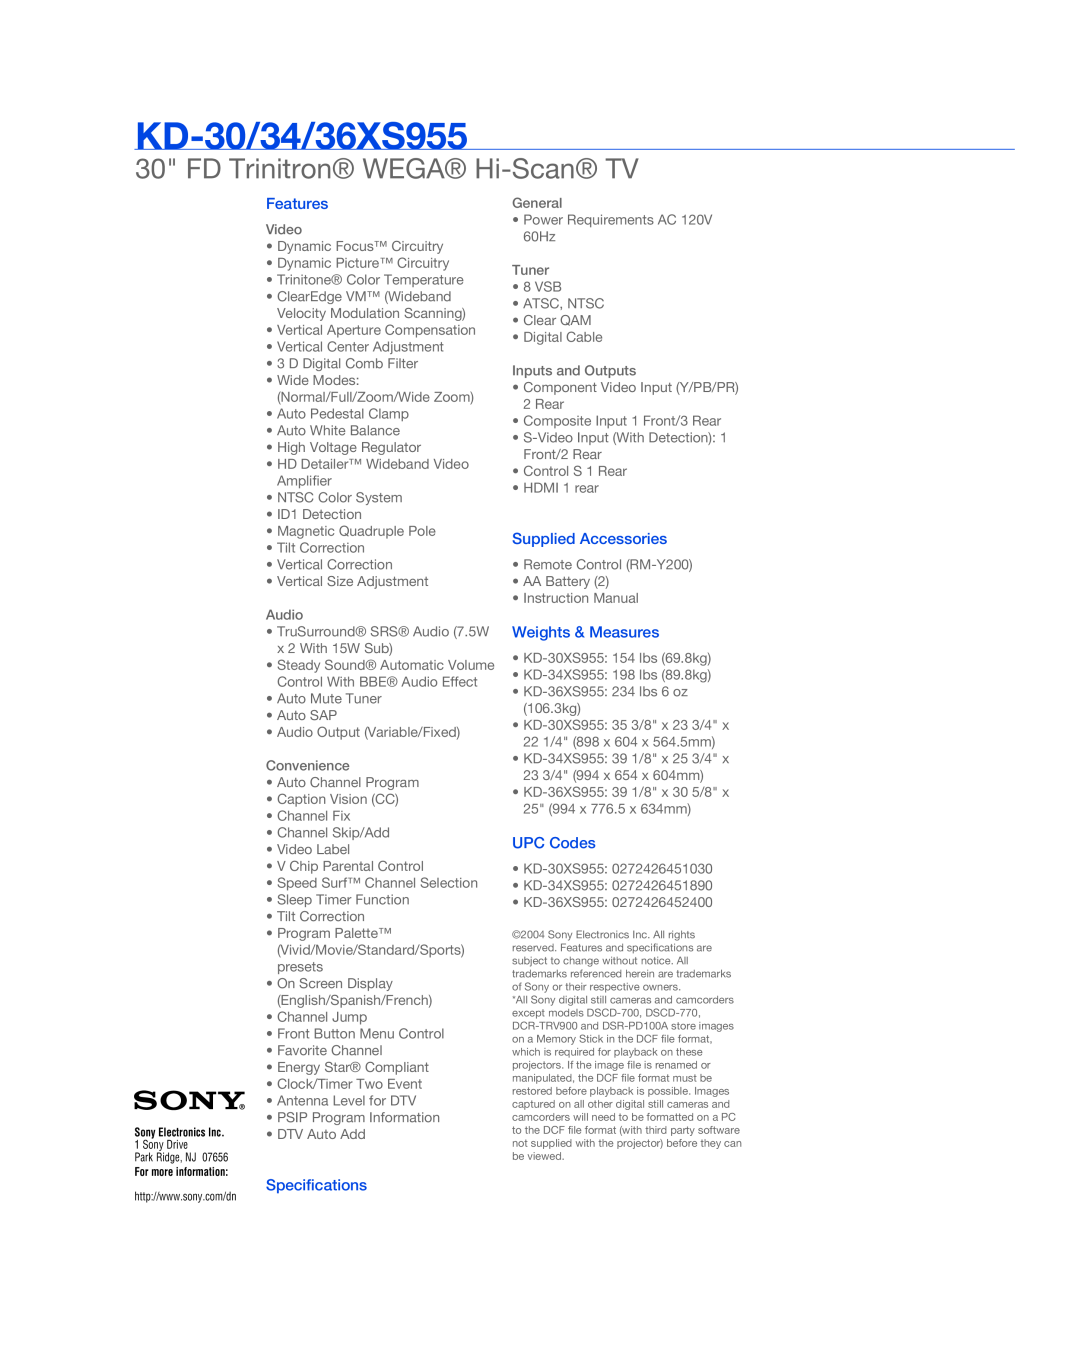 Sony TRINITRON WEGA manual KD-30/34/36XS955, FD Trinitron WEGA Hi-Scan TV, Features, Specifications, Supplied Accessories 